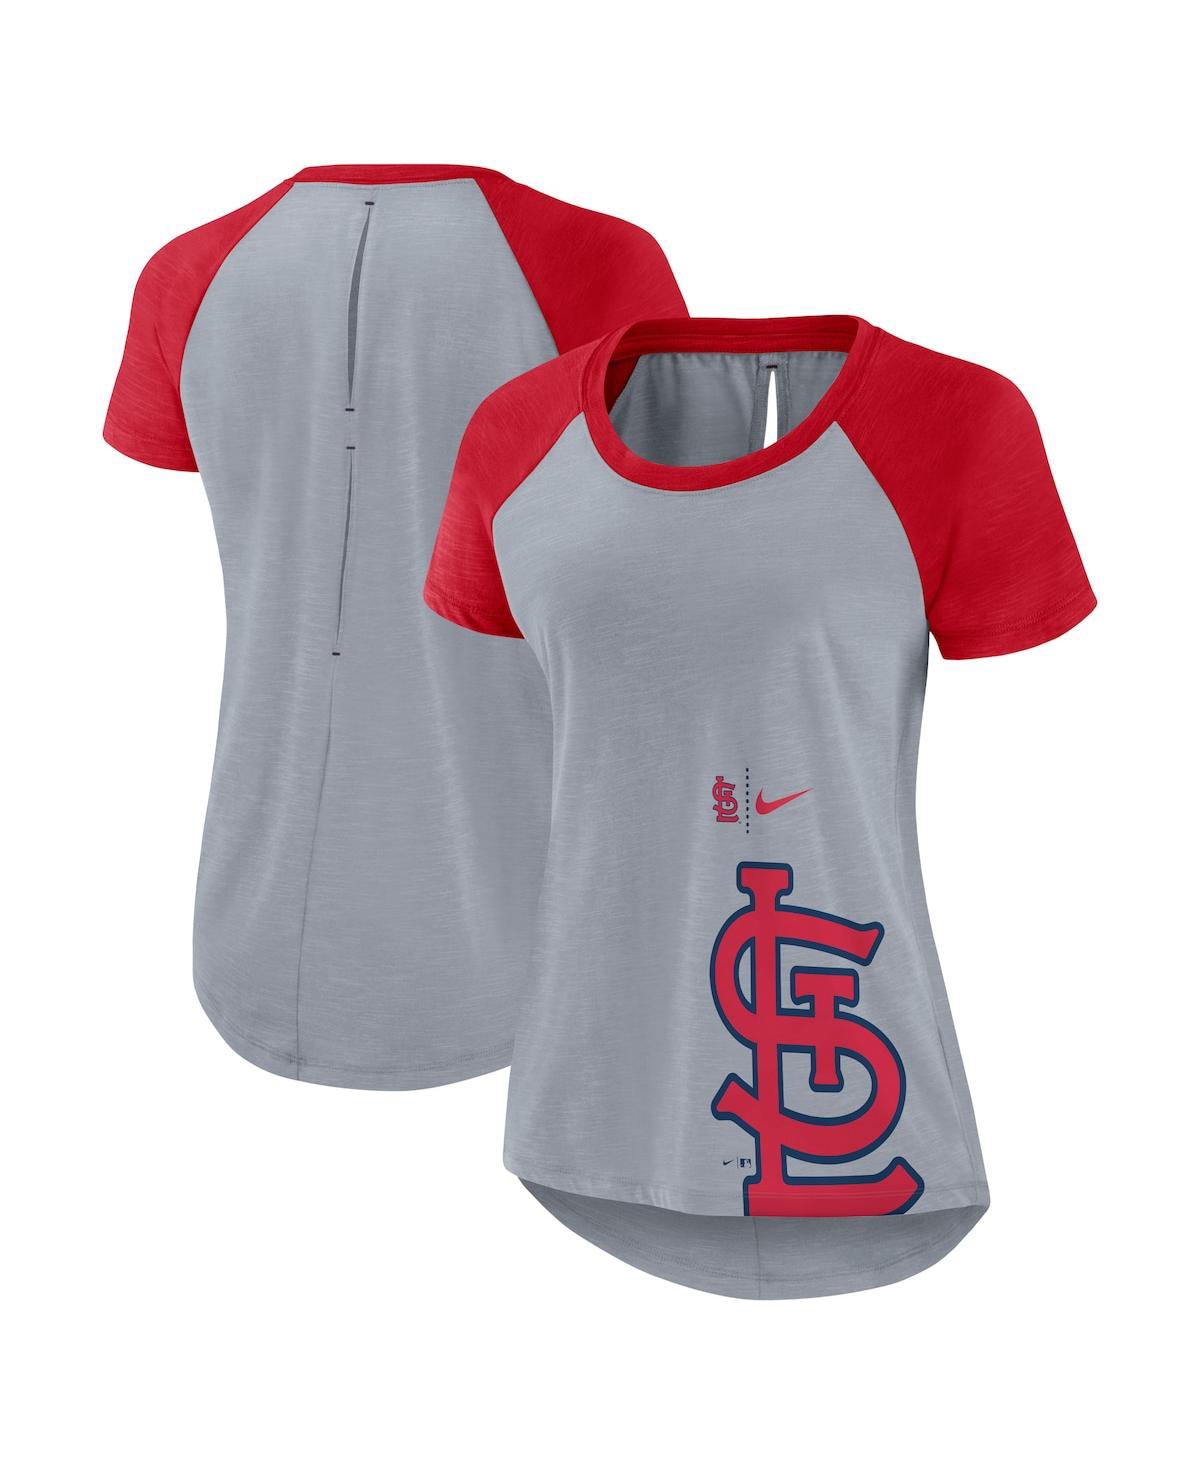 Women's Nike White/Heather Black Arizona Cardinals Back Cutout Raglan T- Shirt